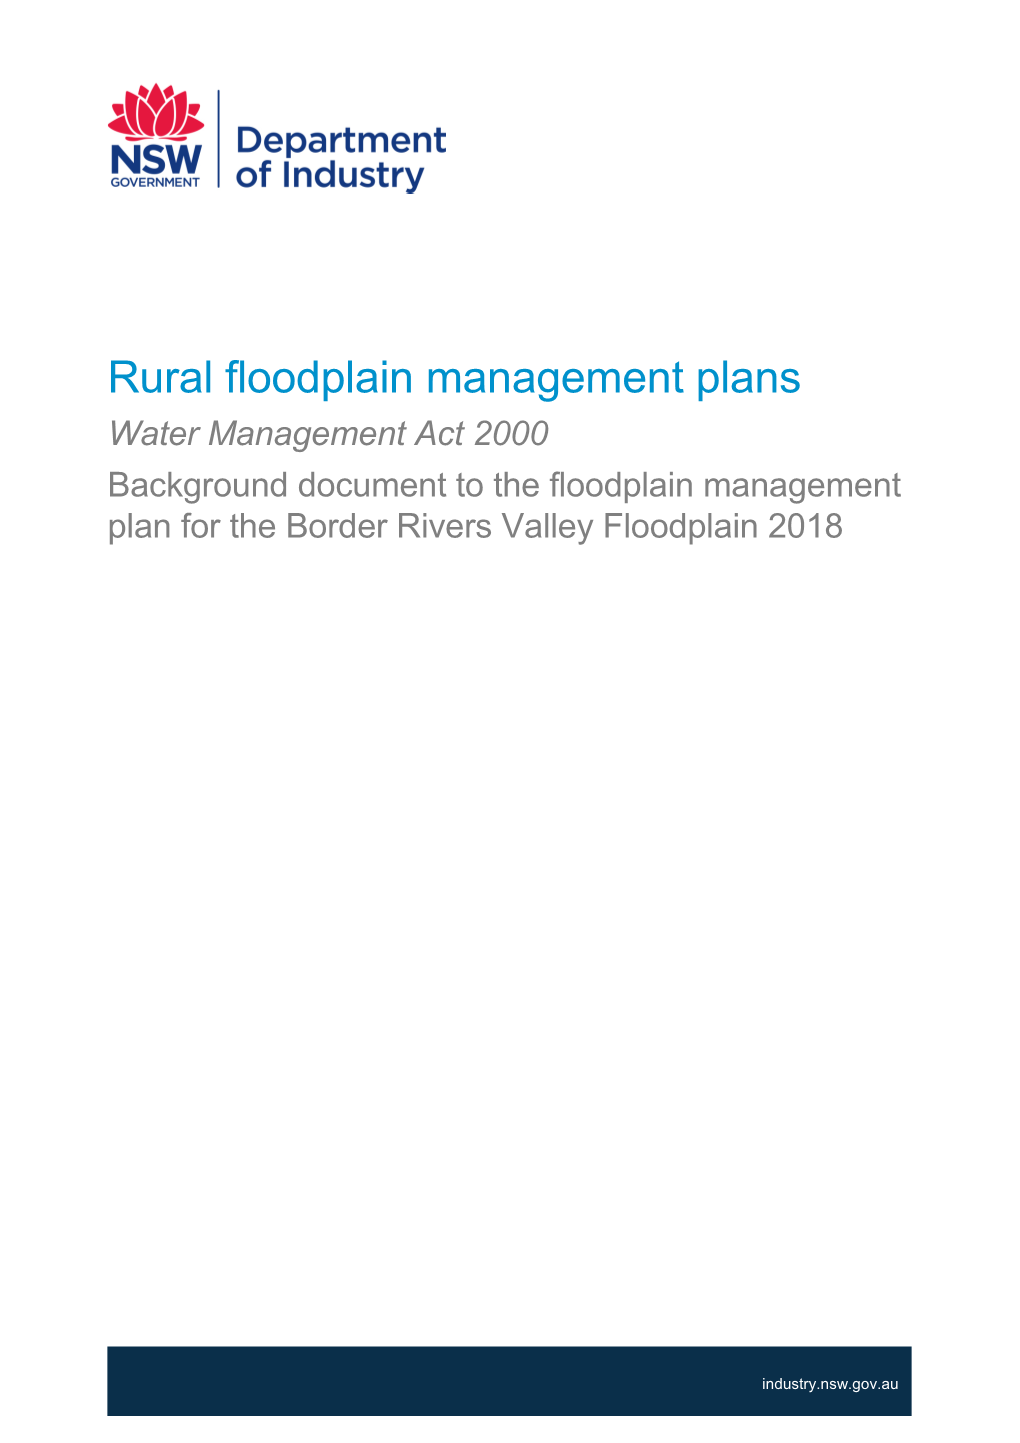 Draft Floodplain Management Plan for the Border Rivers Valley Floodplain 2018 (Draft Border Rivers Valley FMP)